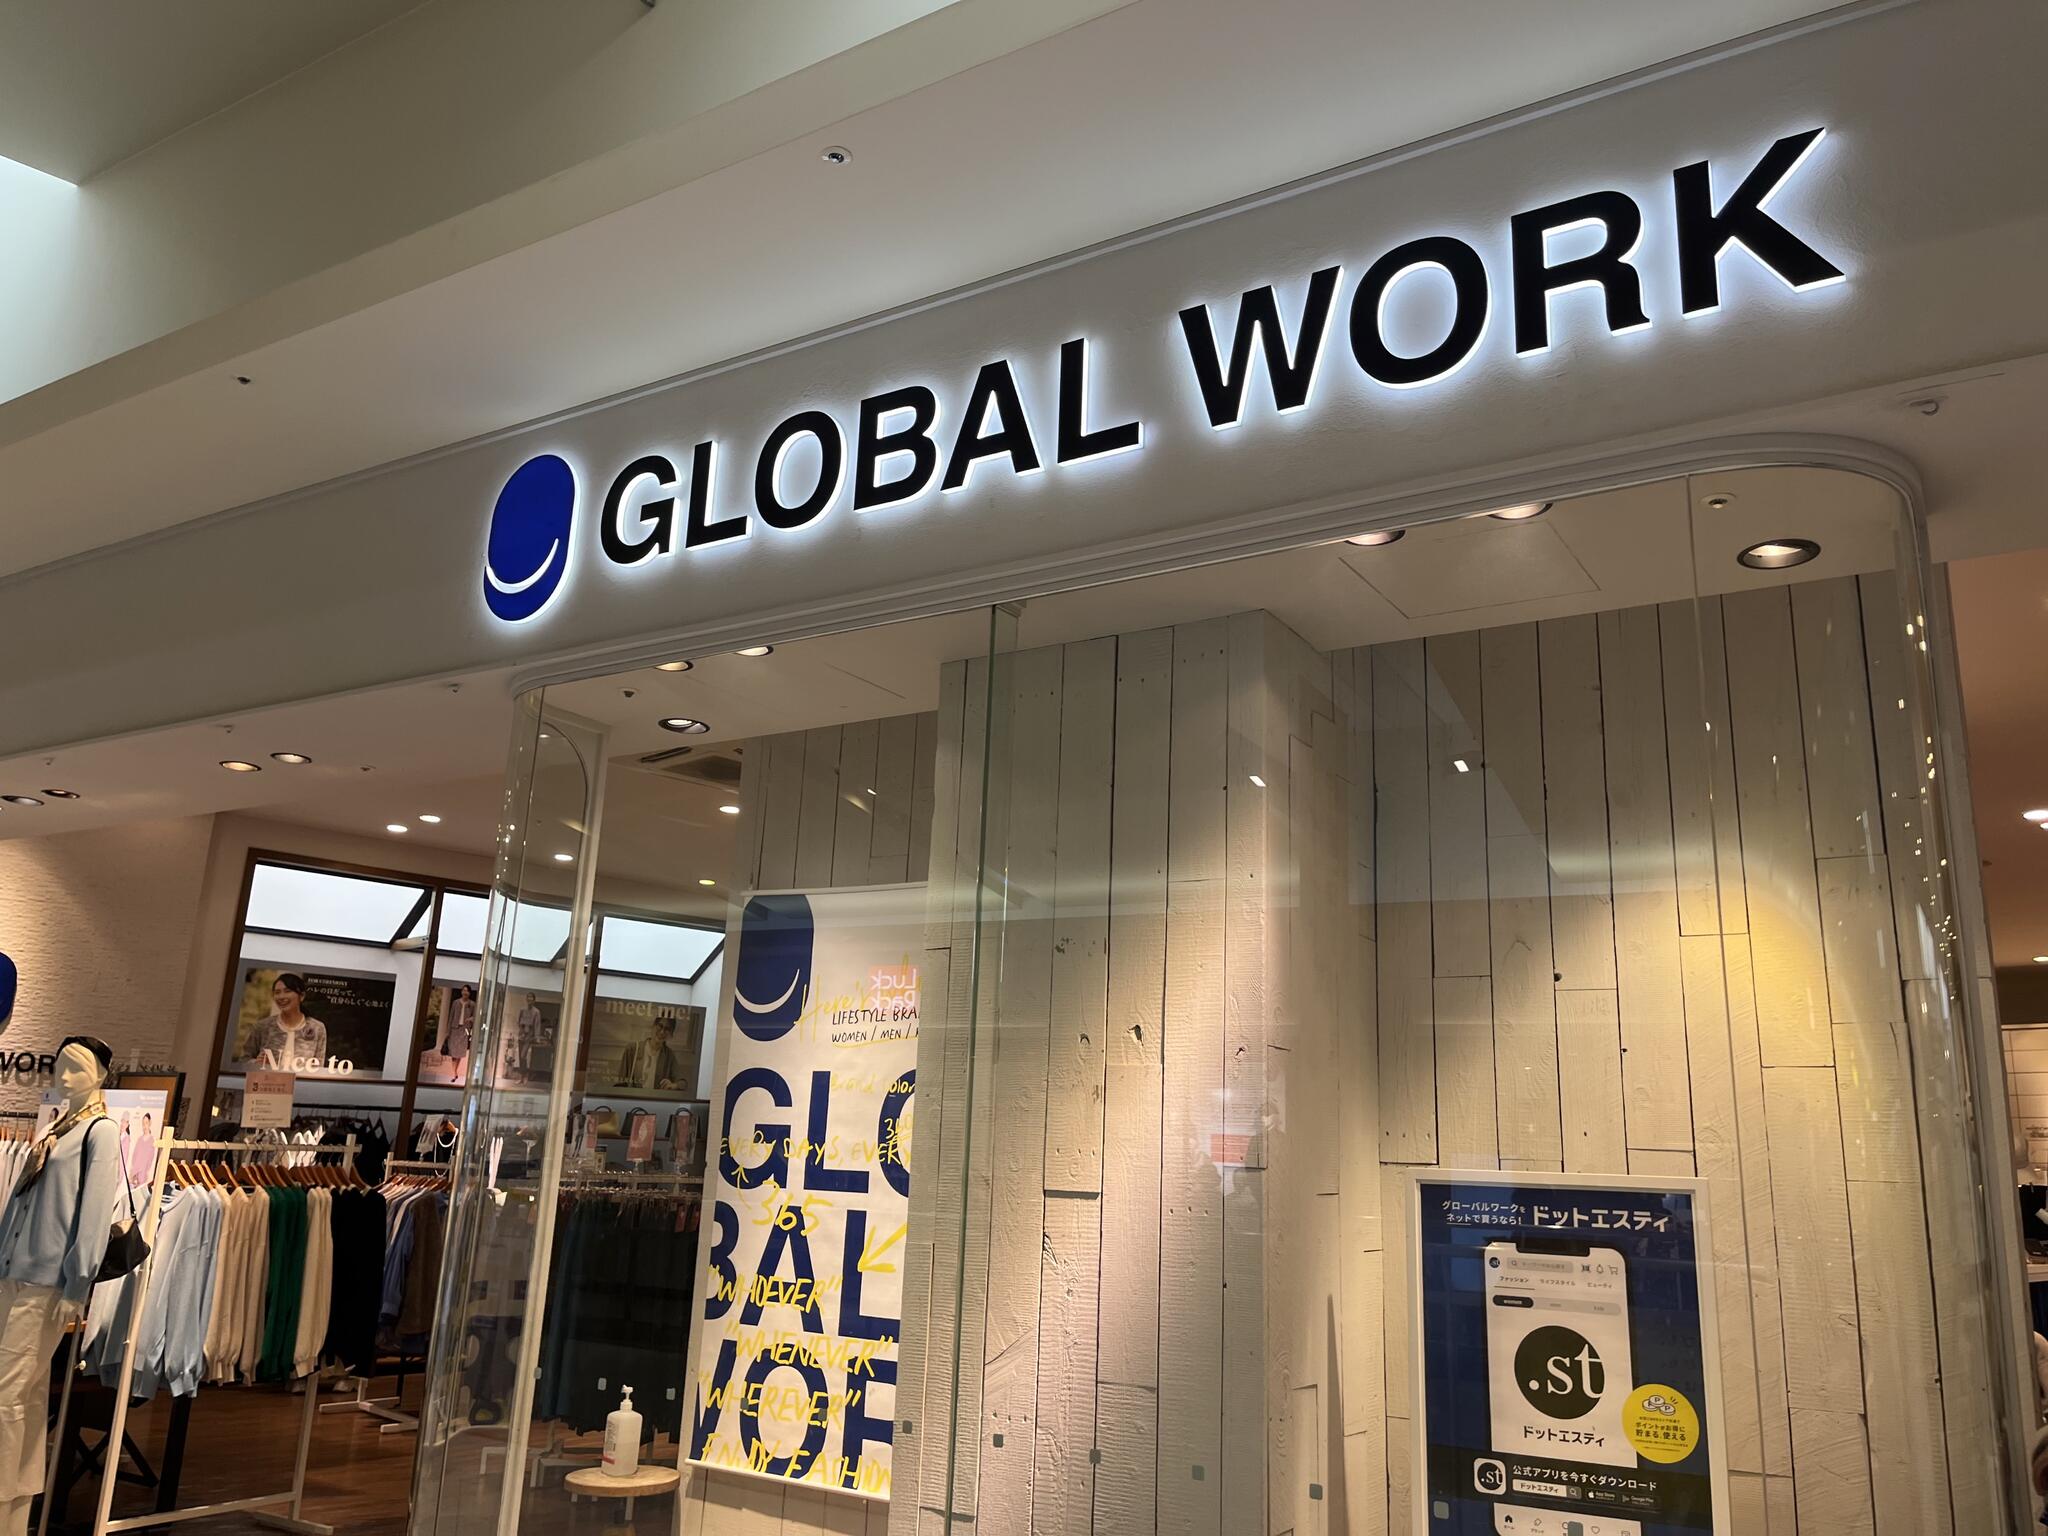 GLOBAL WORK ららぽーと新三郷の代表写真1